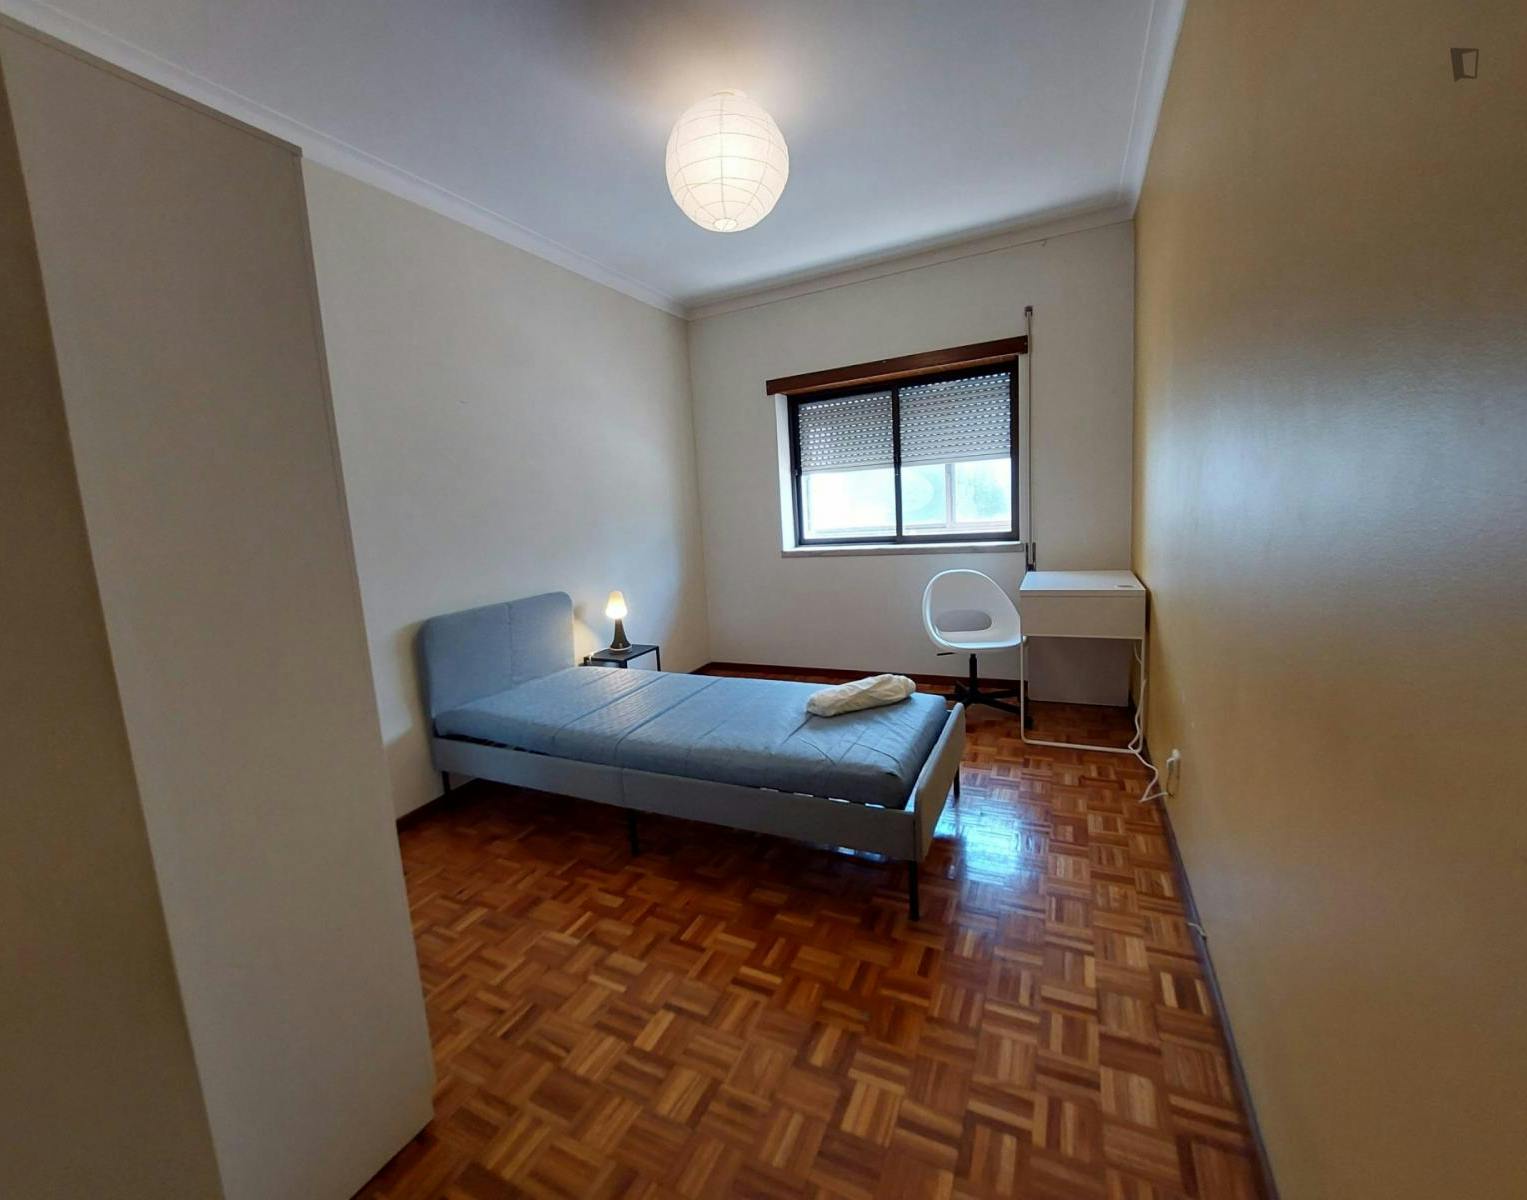 Cosy single bedroom in a 4-bedroom flat